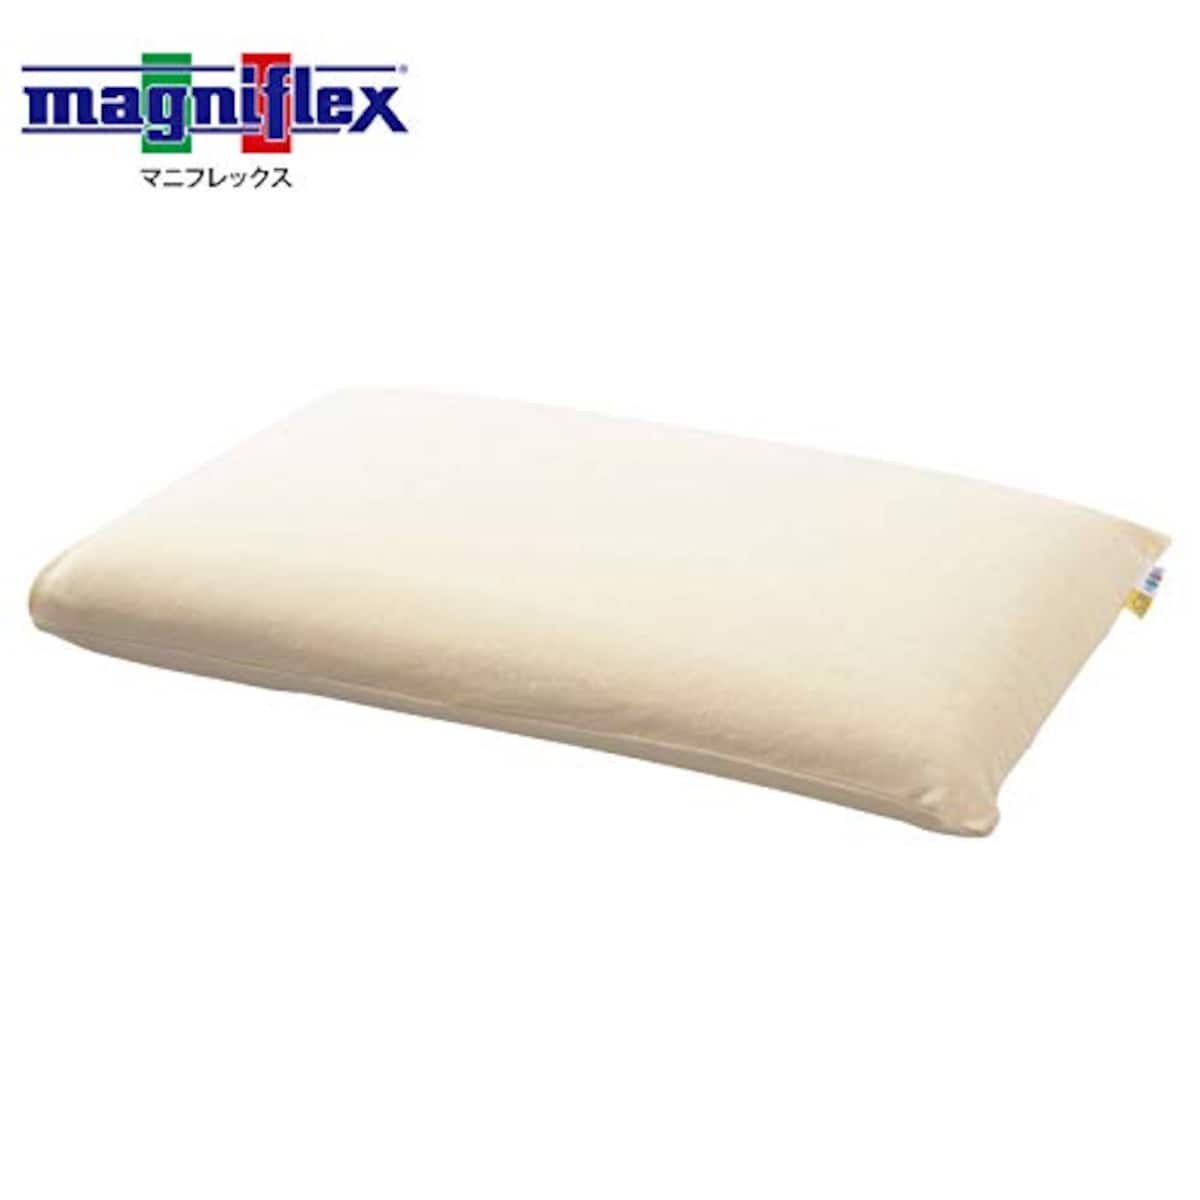 magniflex(マニフレックス) ピローグランデ - 枕